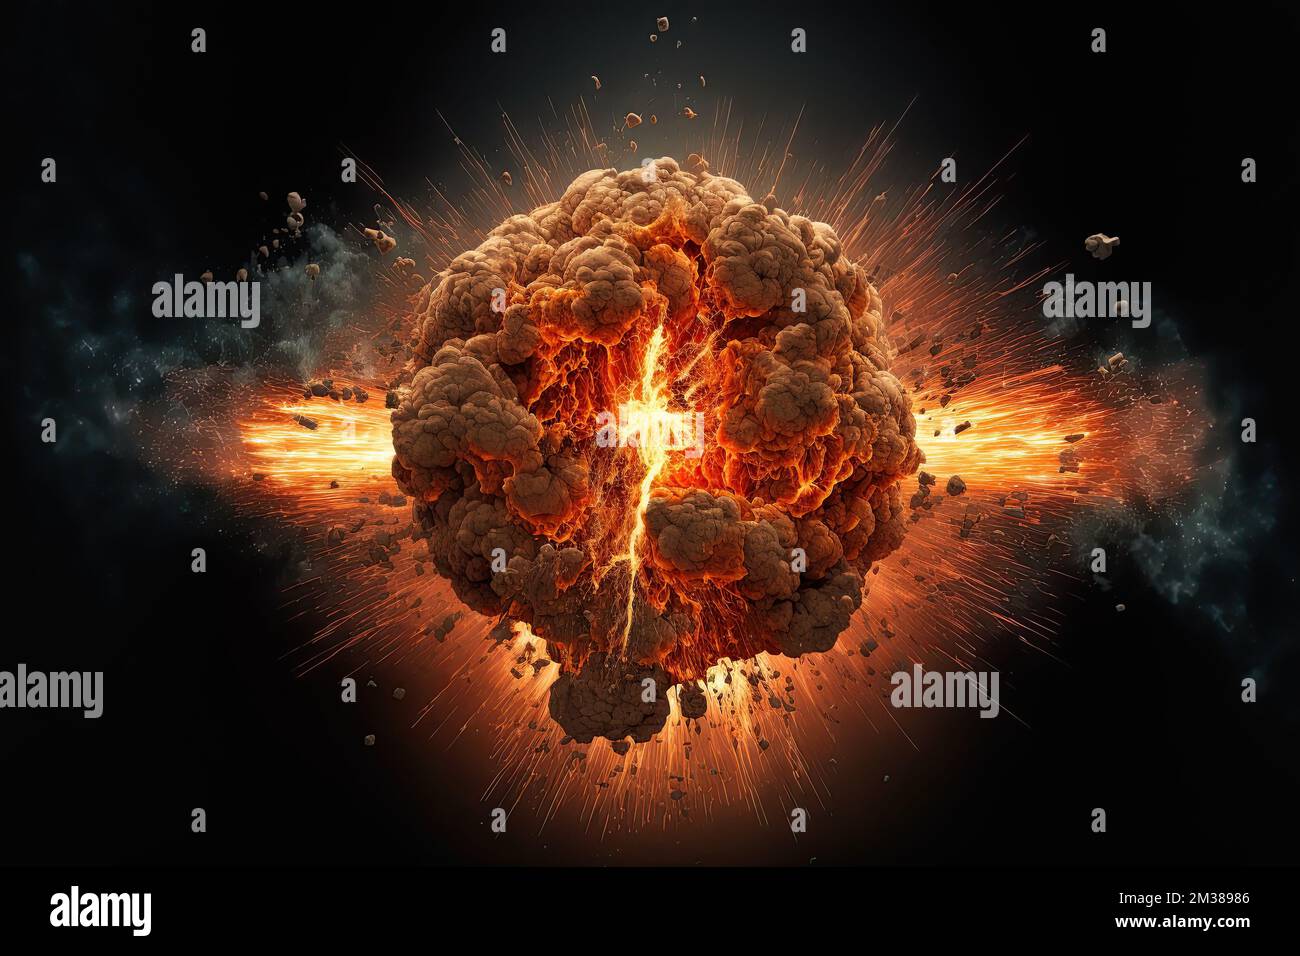 fireball created by a nuclear explosion on a war-torn space and world explosion. A nuclear explosion fireball in a nuclear mushroom cloud of an Stock Photo